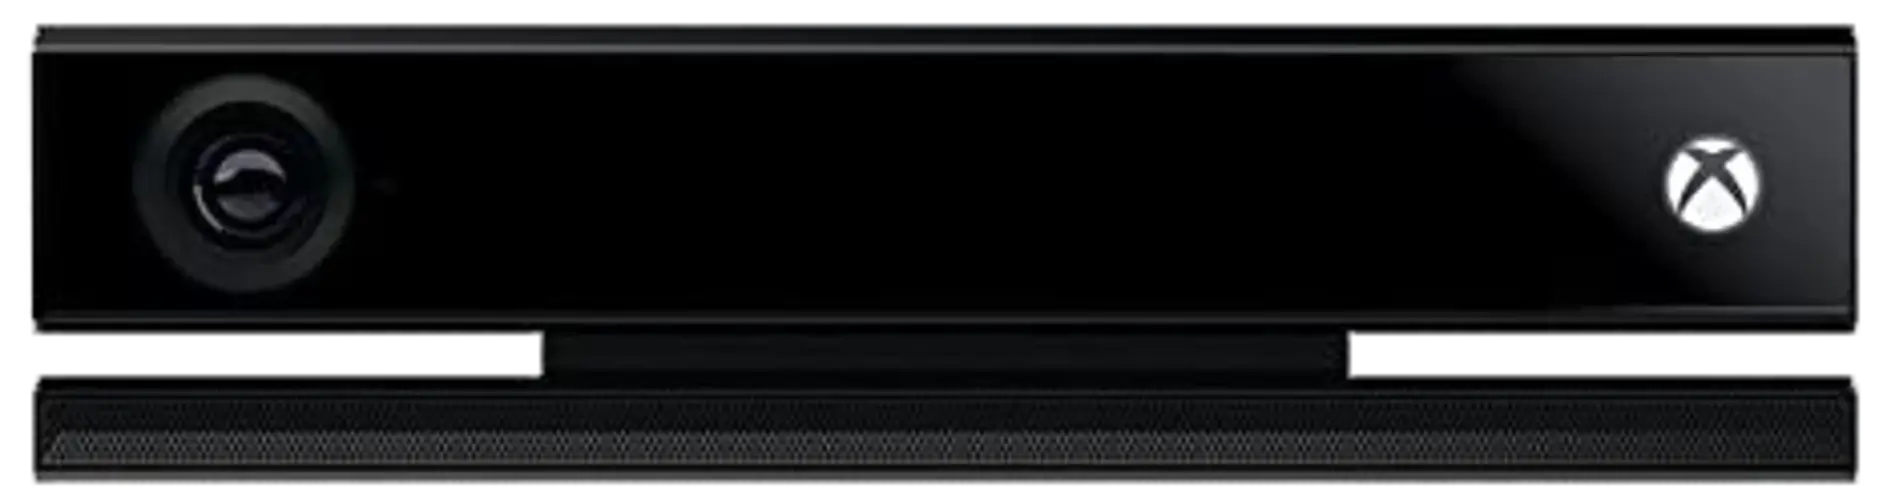 Xbox One Kinect Sensor, Black - GT3-00003